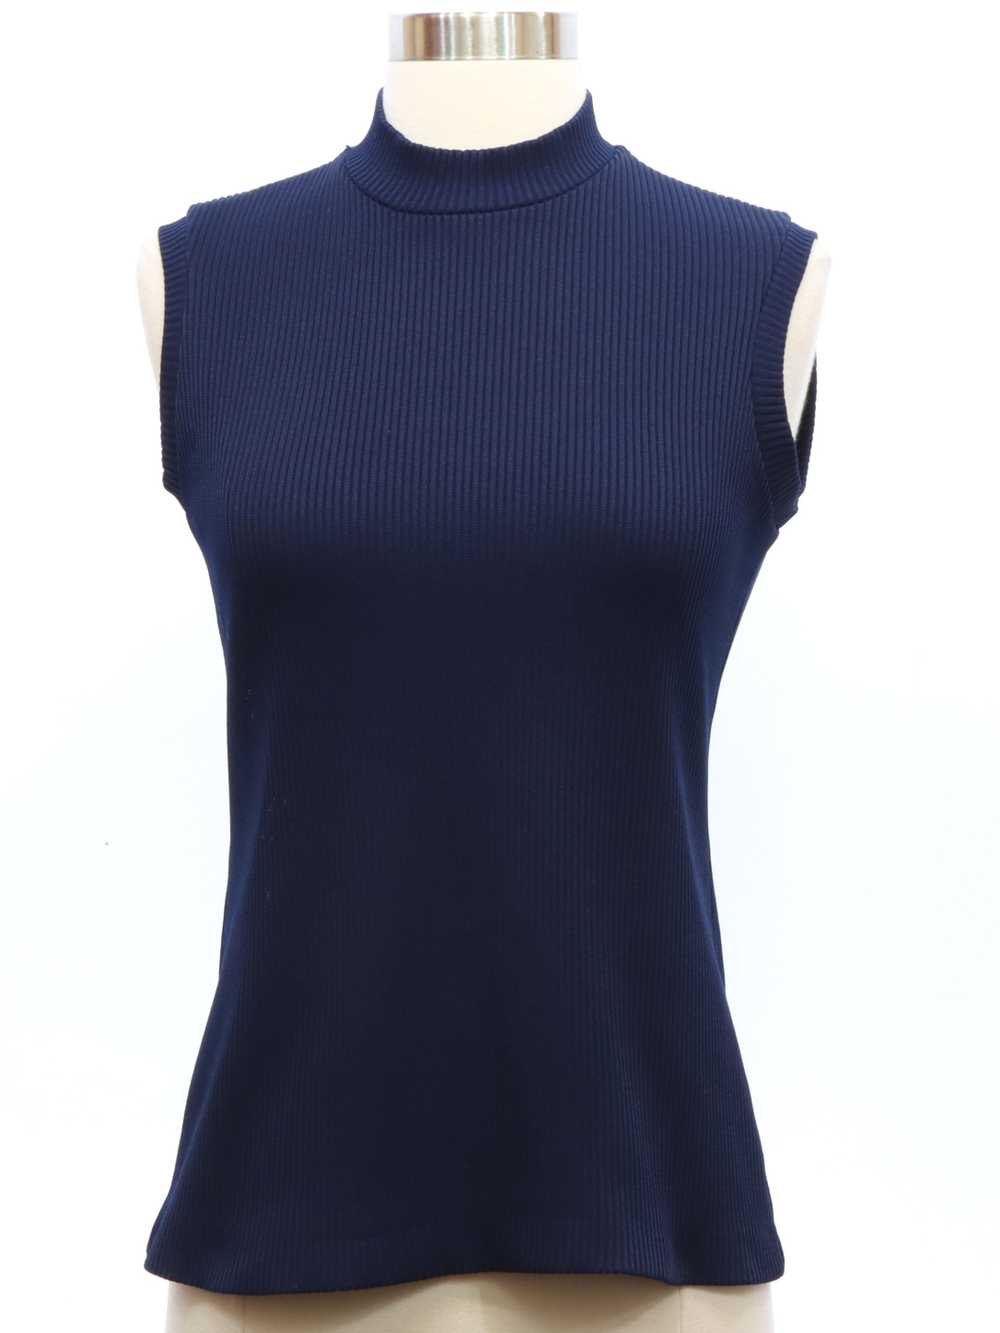 1960's Womens/Girls Mod Knit Shirt - image 1